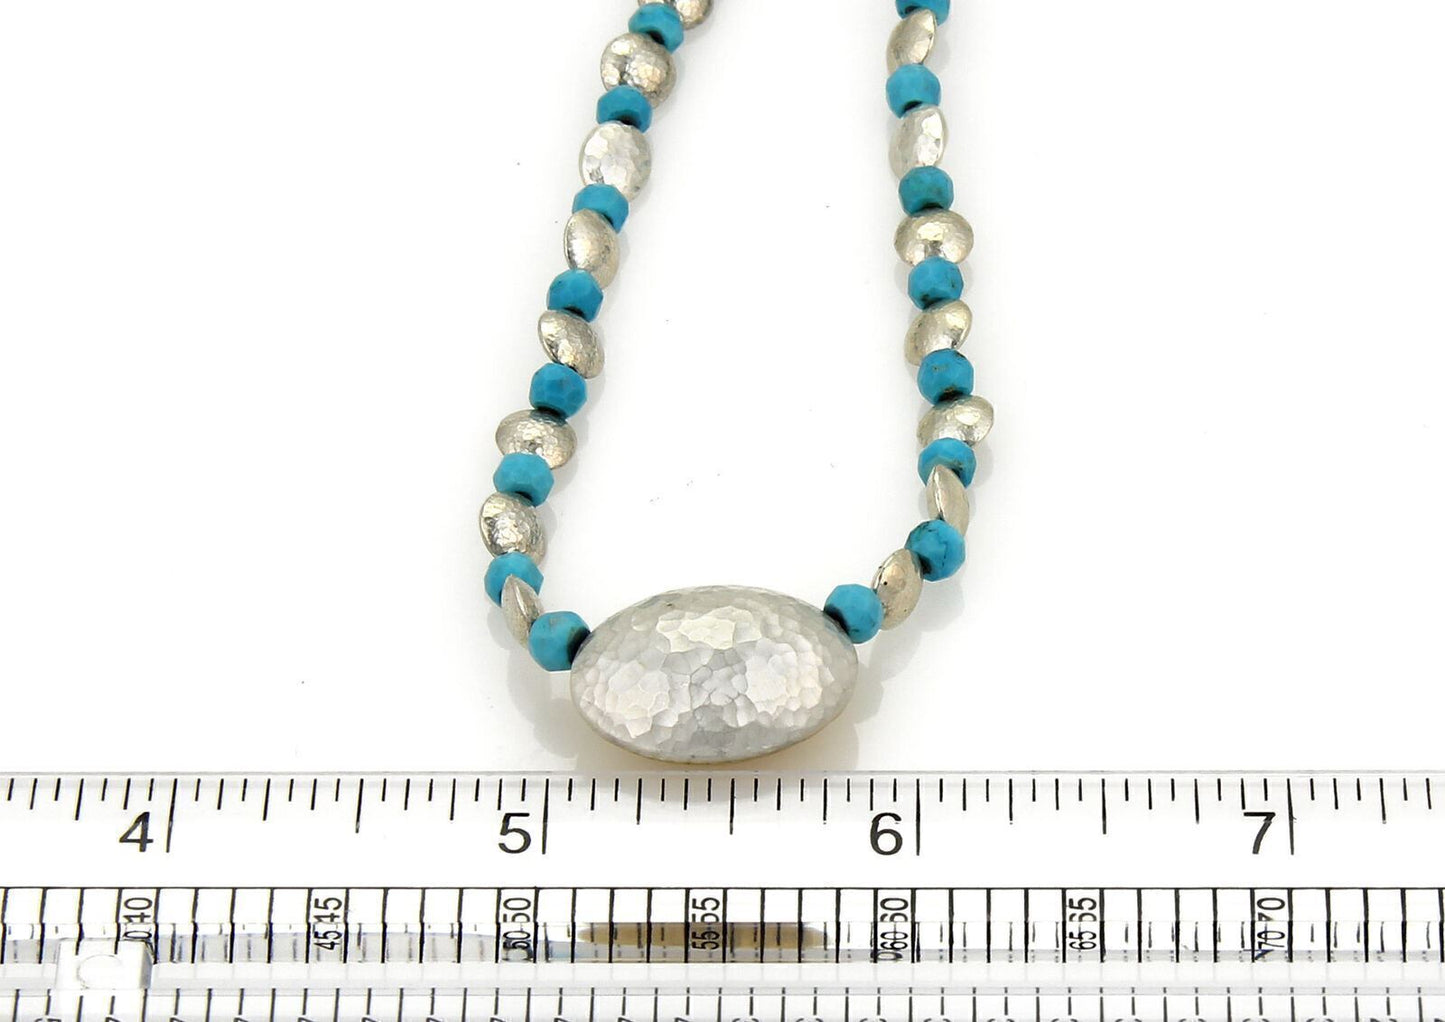 Gurhan Jordan Turquoise Bead Sterling & 24k Layered Gold Necklace